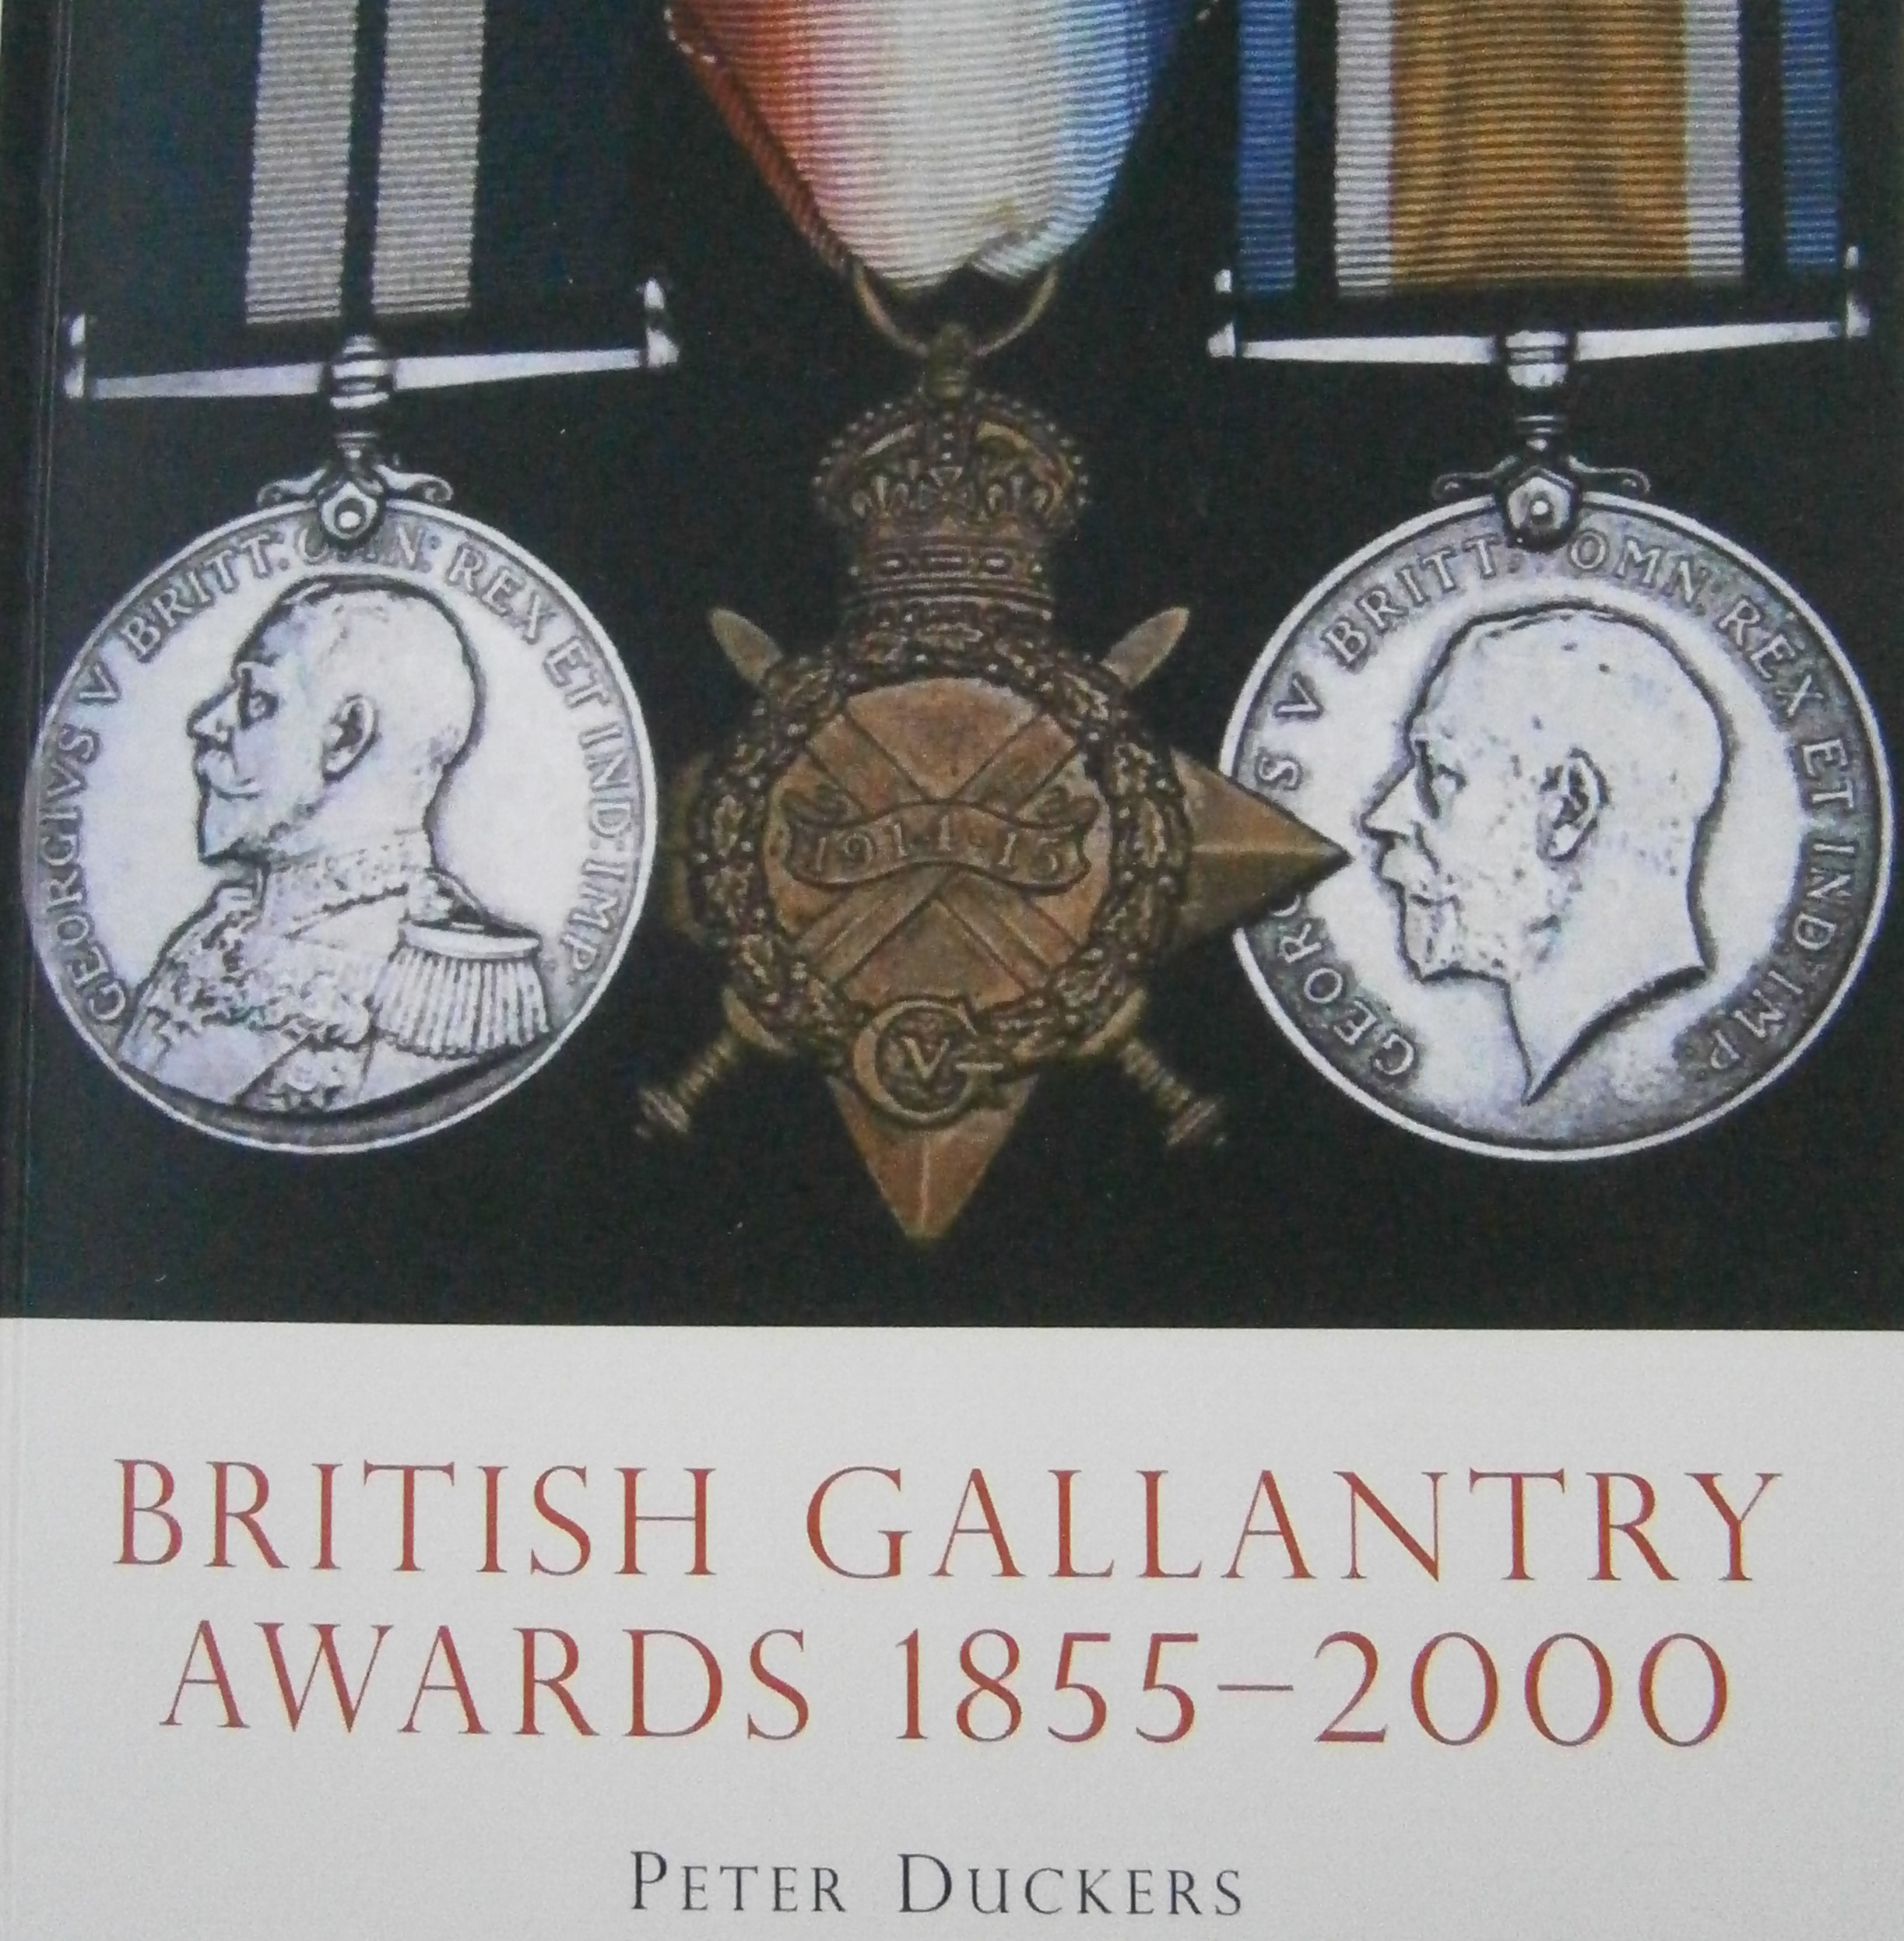 British Gallantry Awards 1855 - 2000